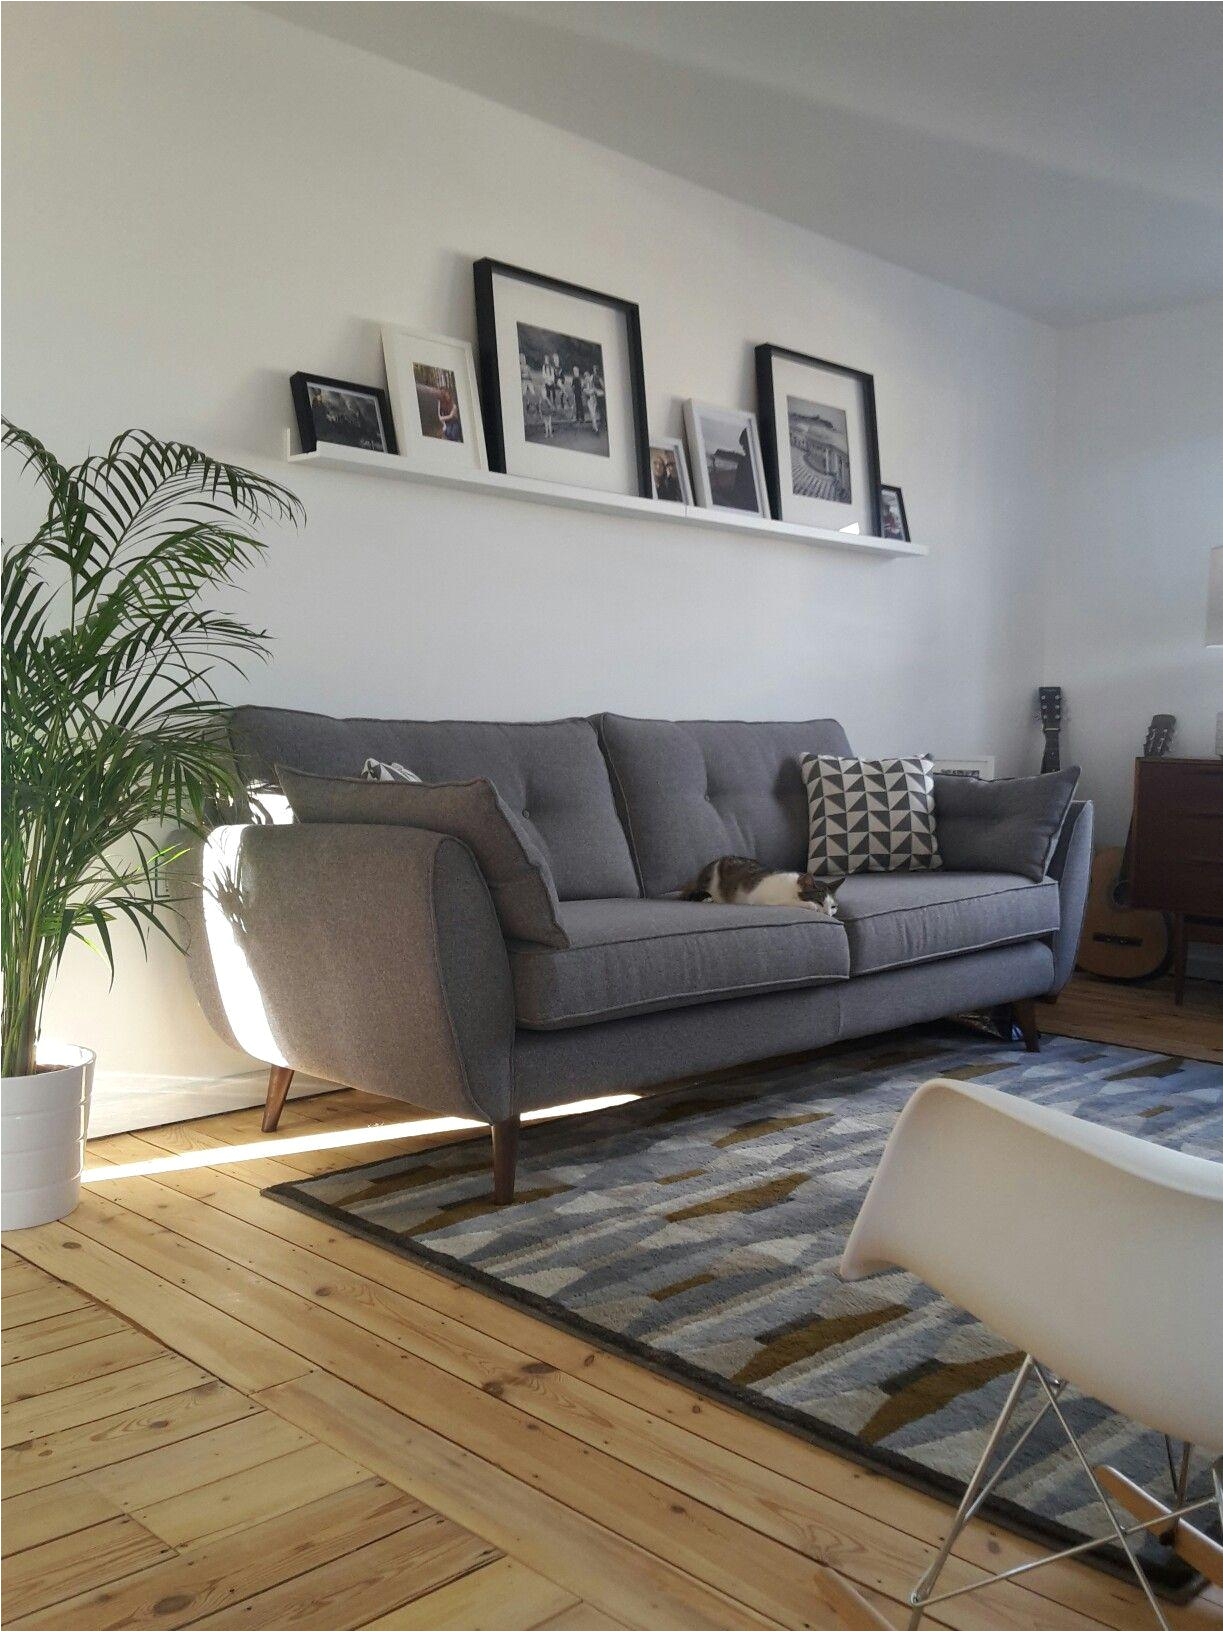 Adorable Living Room Corner sofa or Furniture Small Corner Couch Unique Wicker Outdoor sofa 0d Patio In